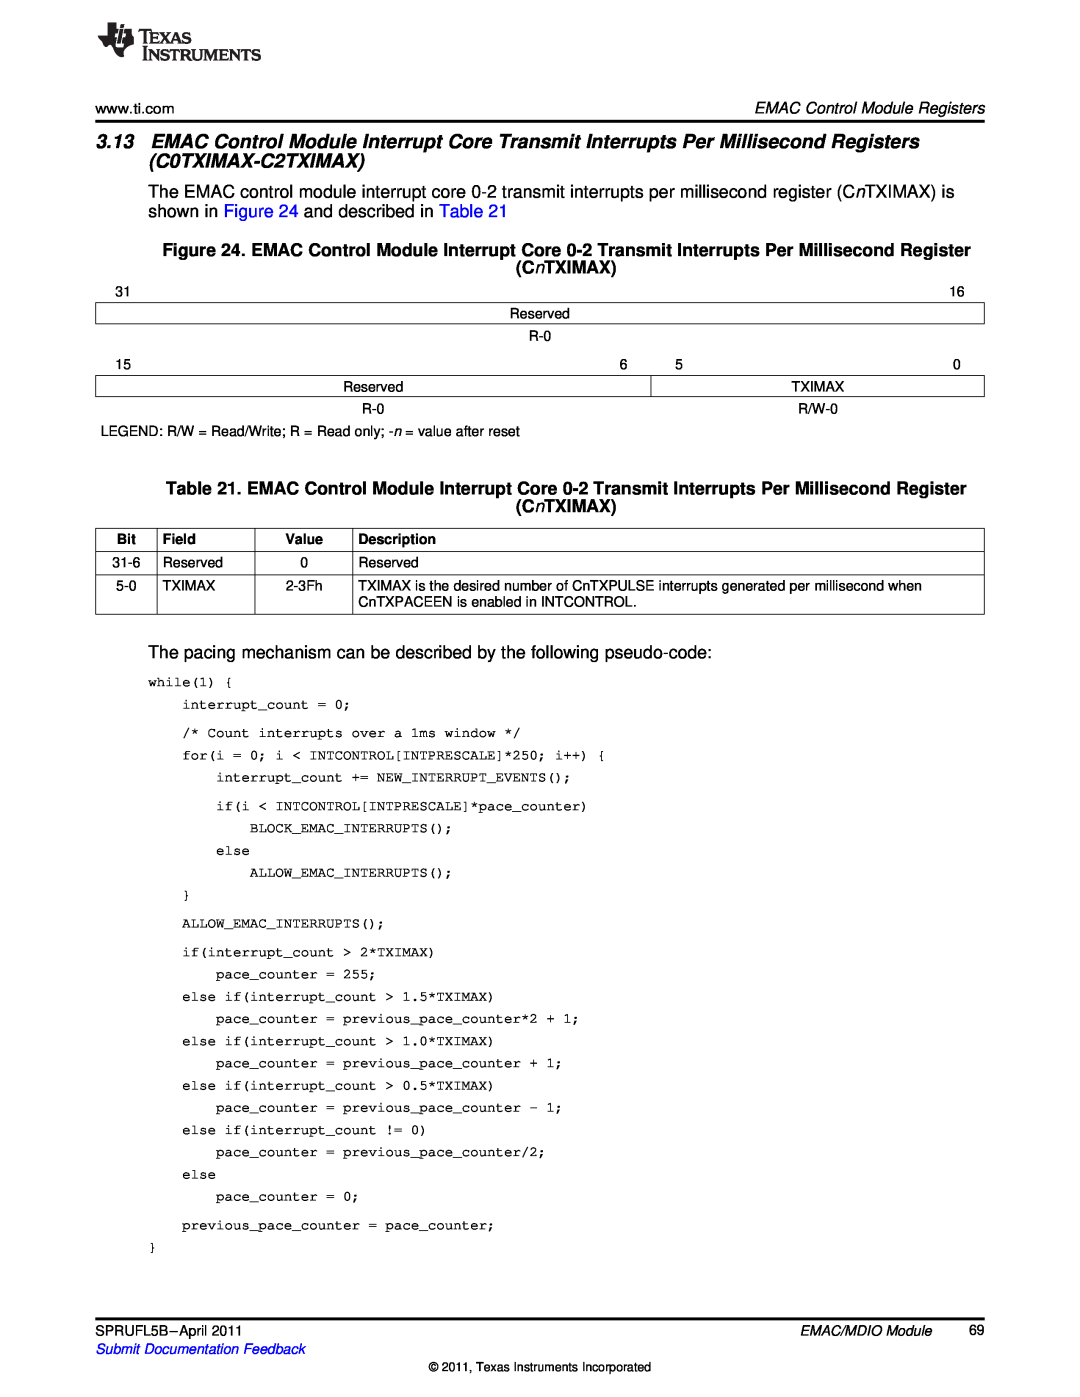 Texas Instruments TMS320C674X manual CnTXIMAX, Field, Value, Description, Submit Documentation Feedback 